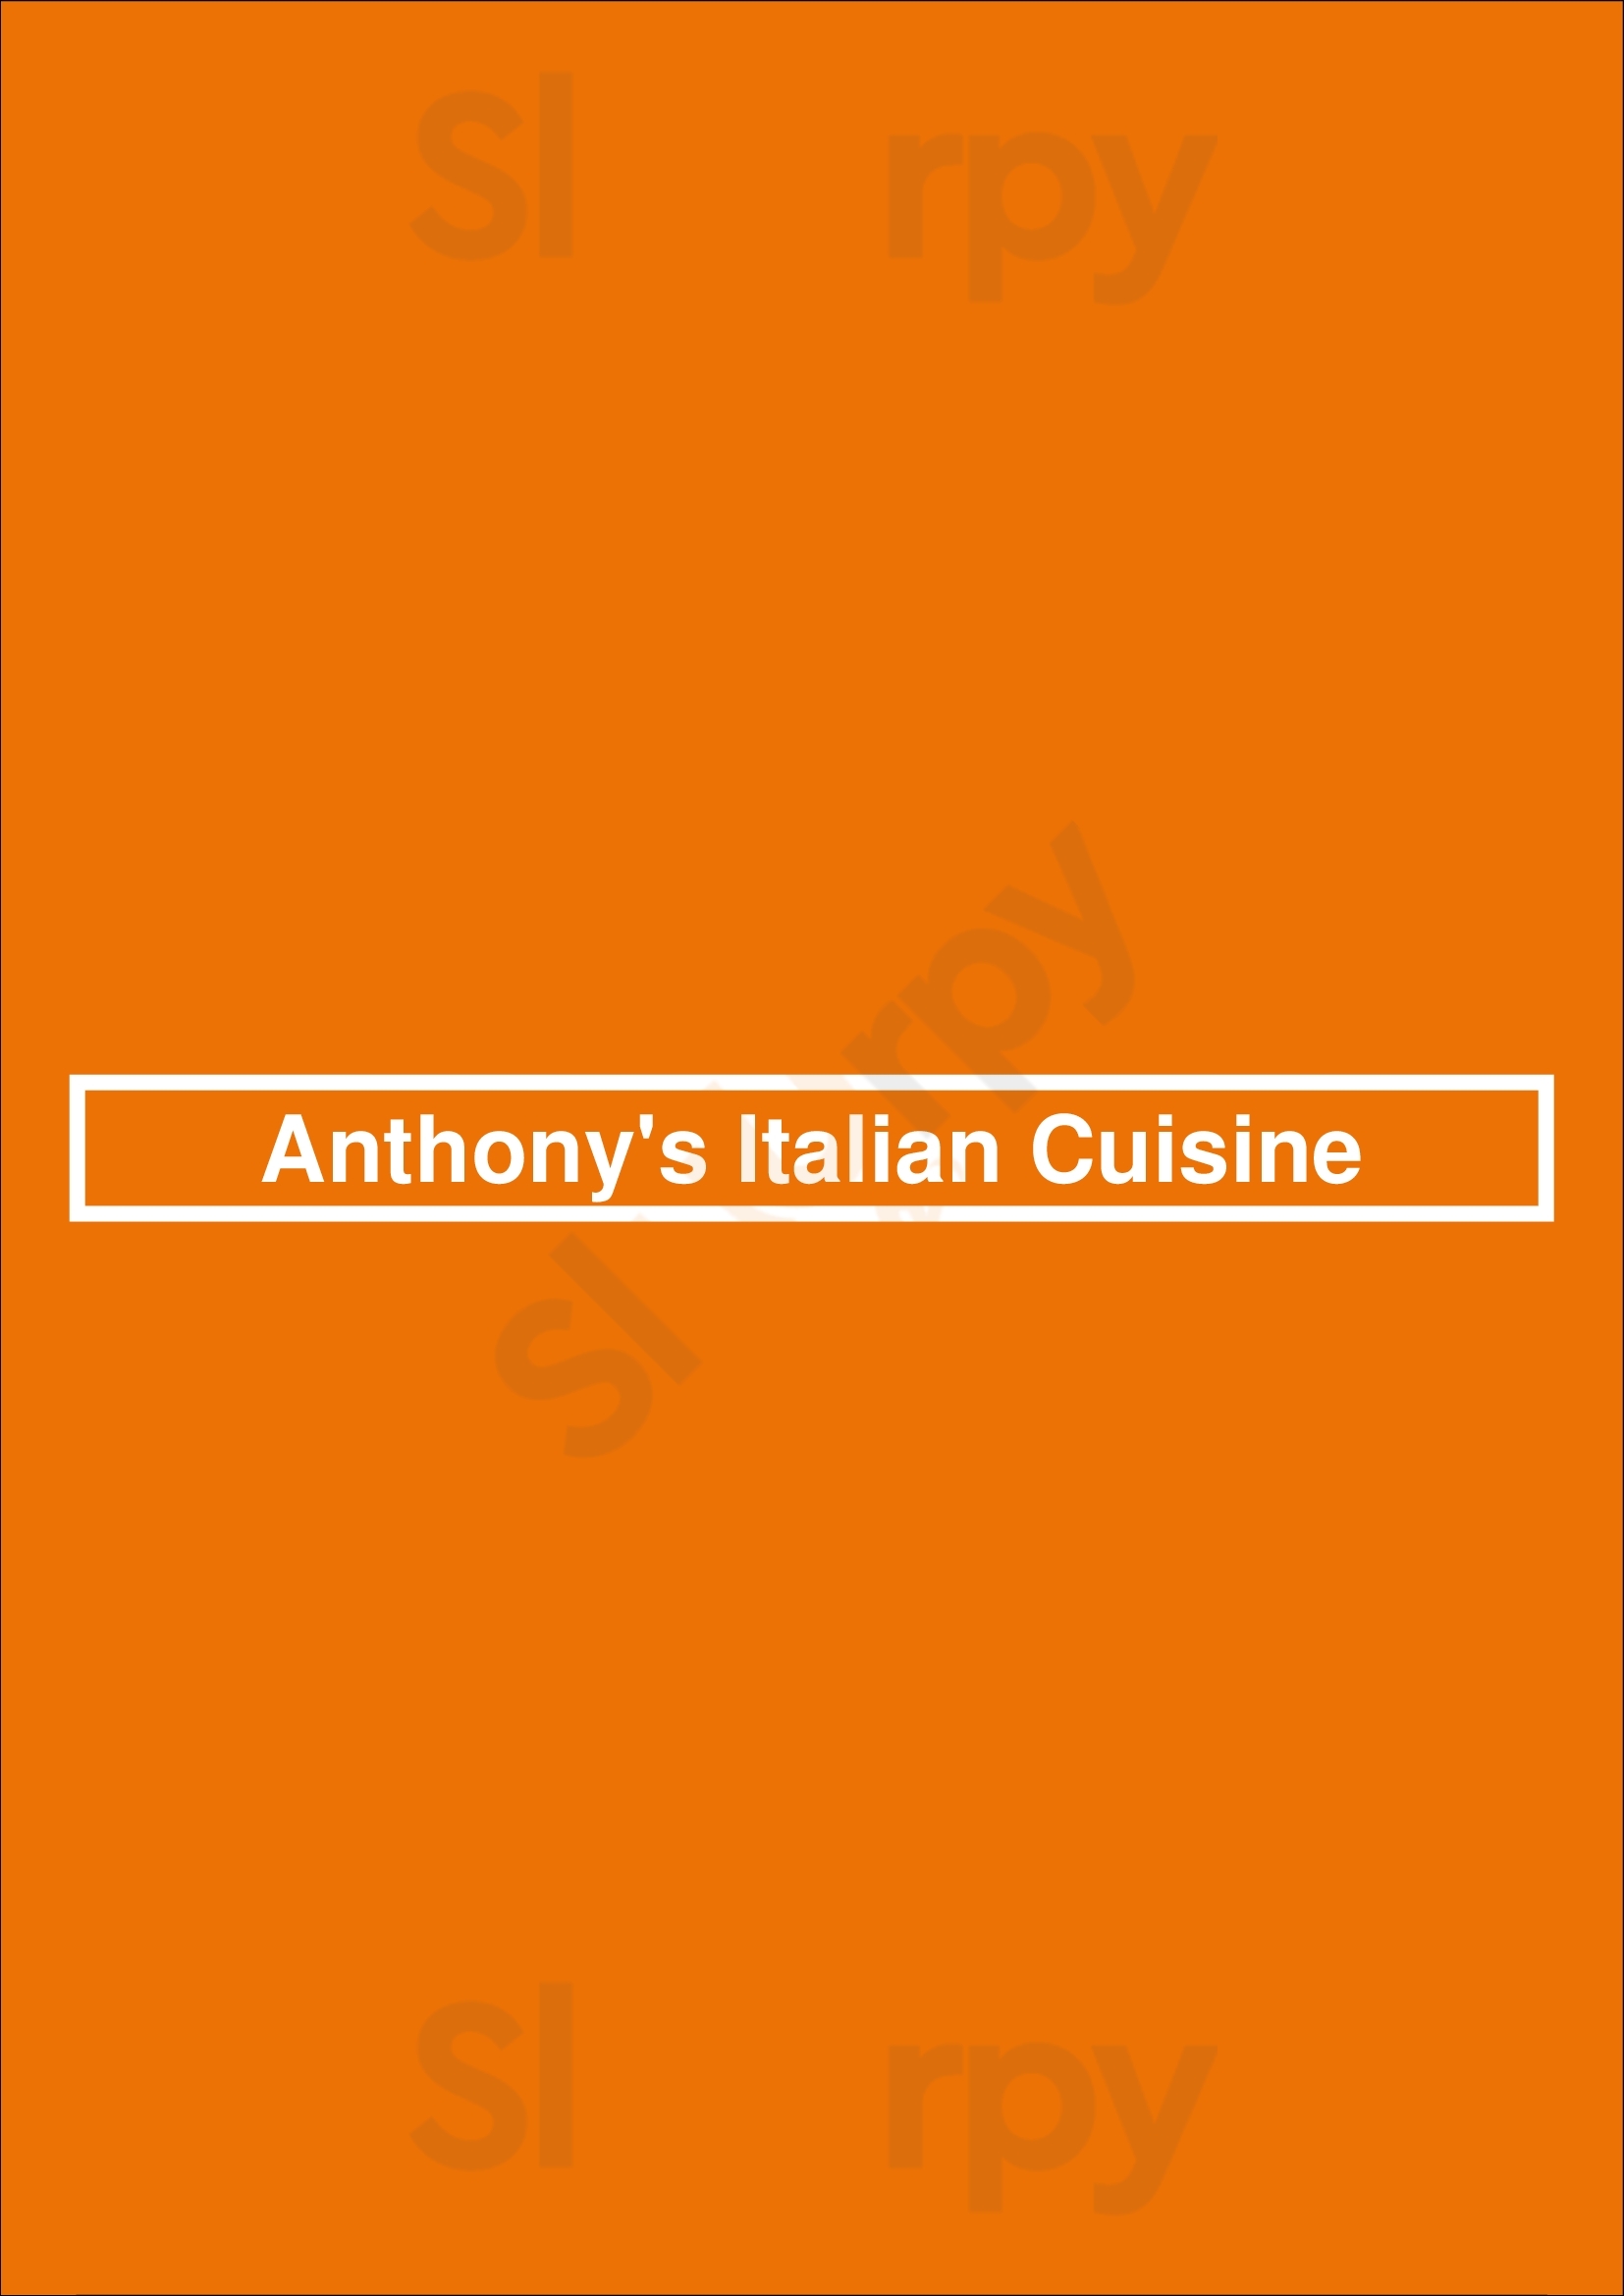 Anthony's Italian Cuisine Sacramento Menu - 1